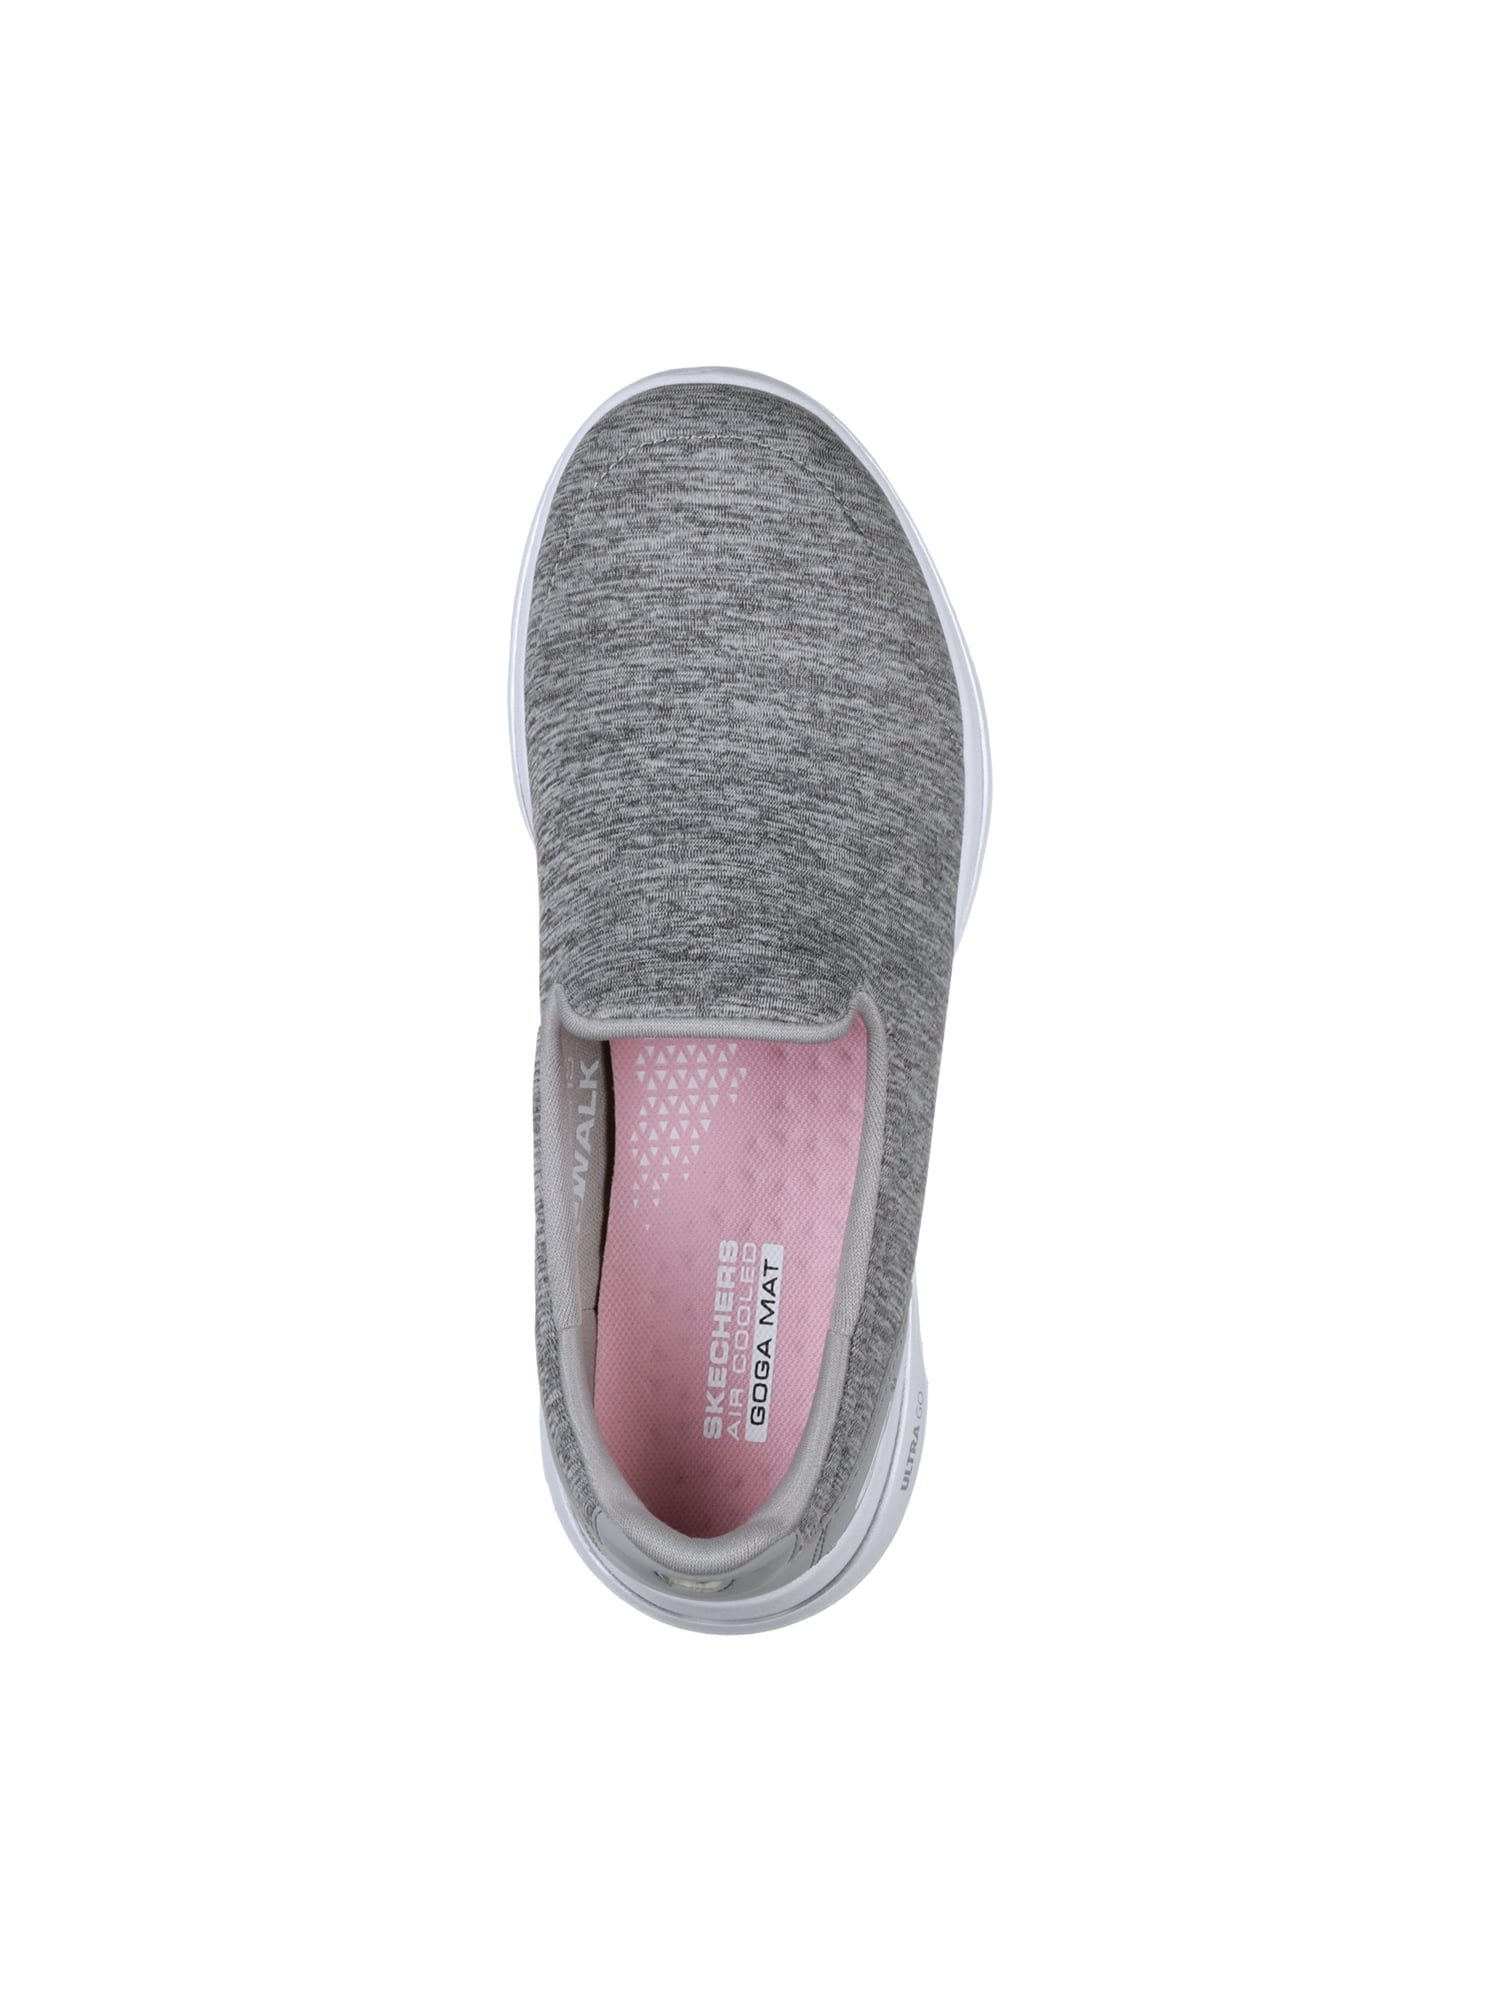 Skechers Women's GOwalk Slip-on Comfort Shoe (Wide Width Available) - Walmart.com